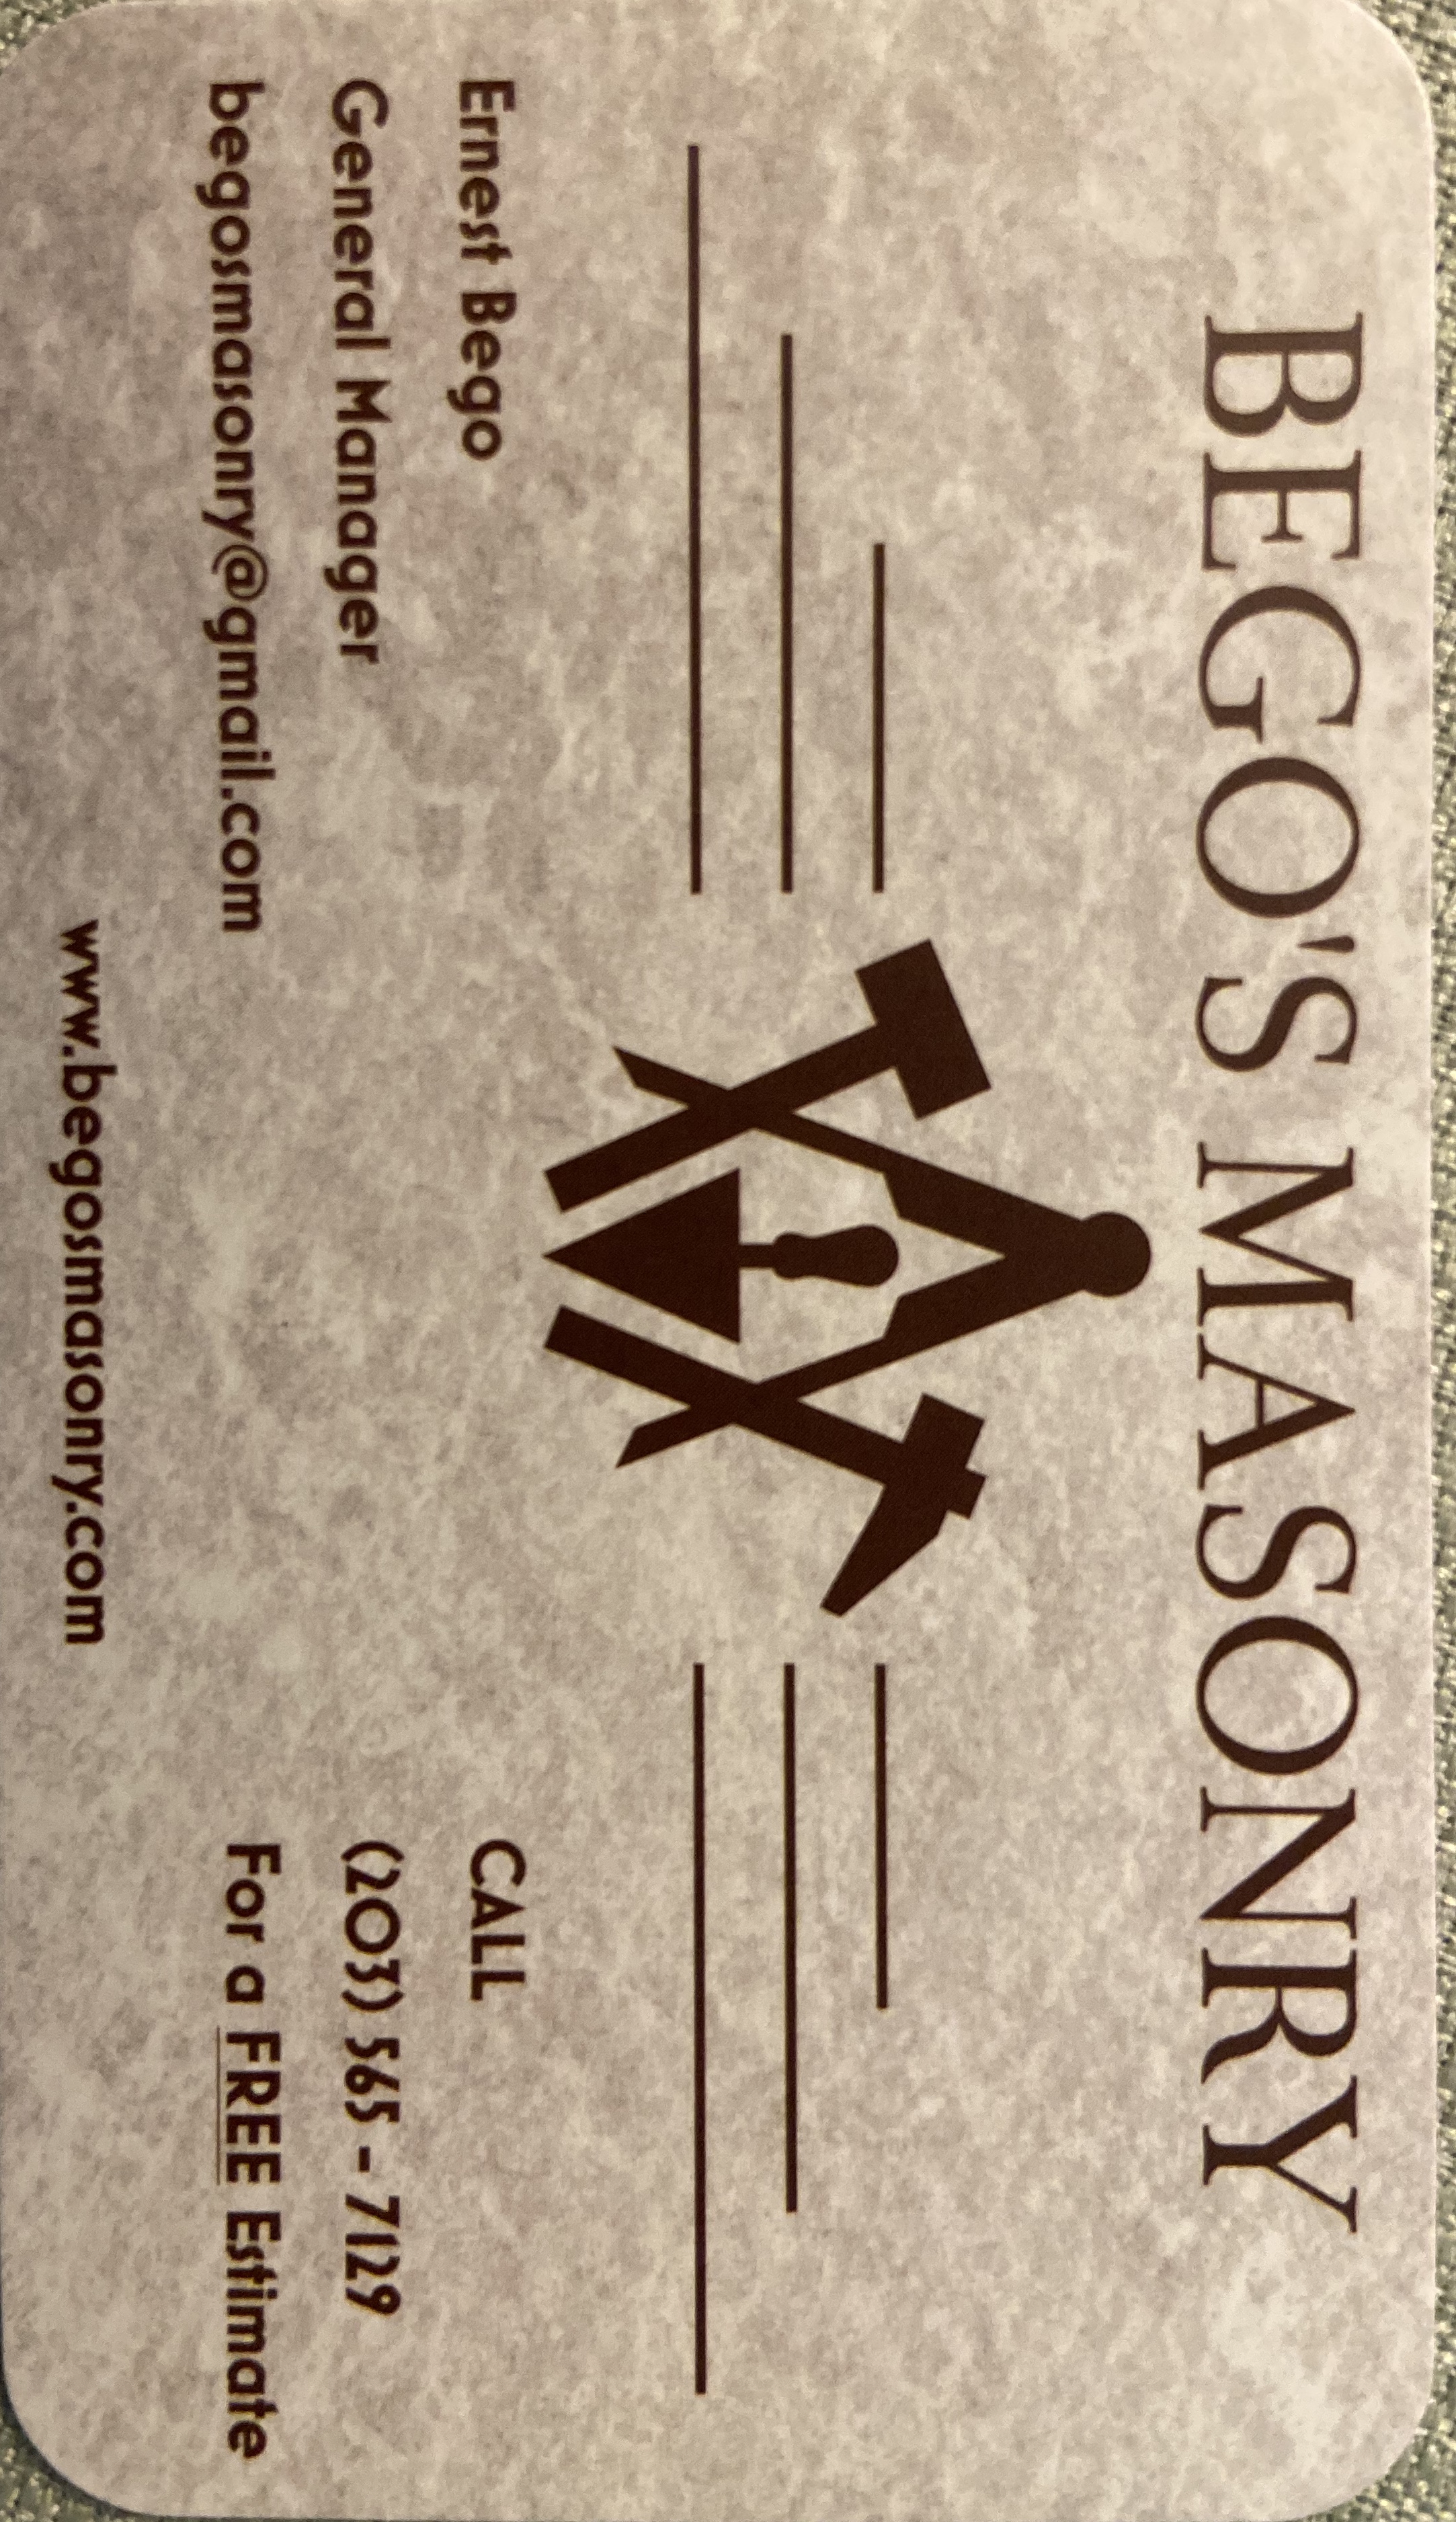 Bego's Masonry, LLC Logo